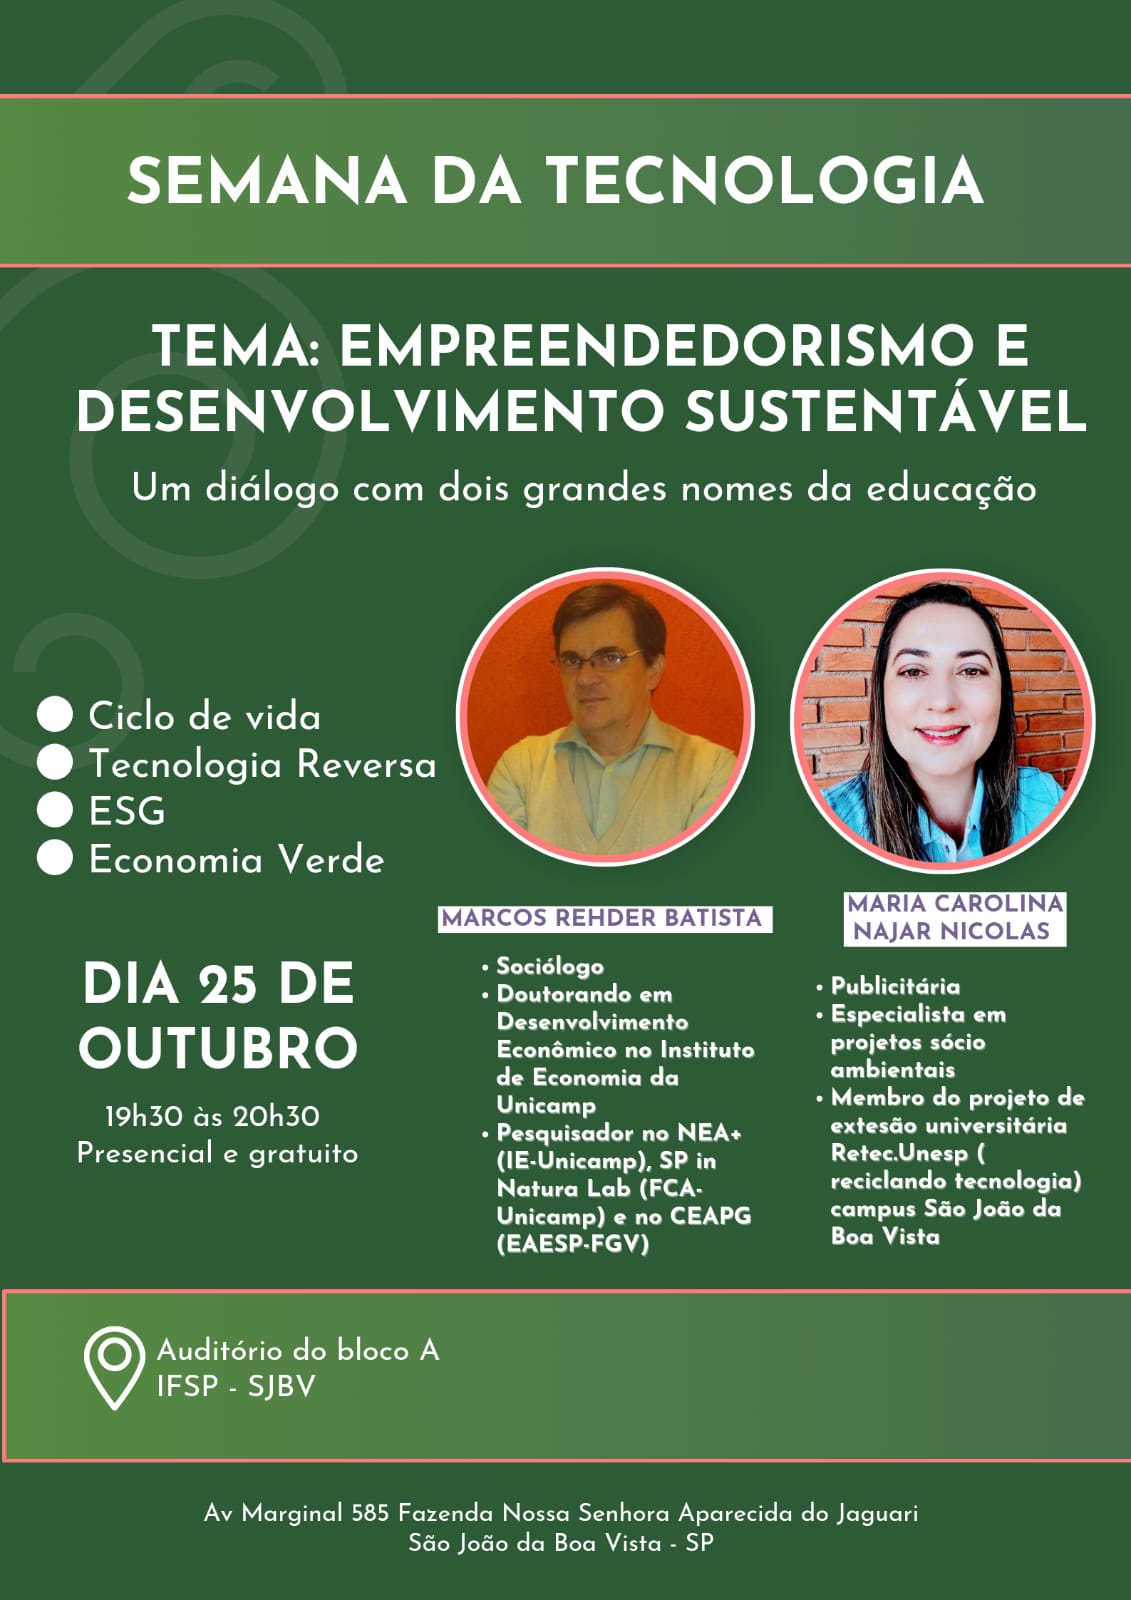 Foto de Palestra "Empreendedorismo e Desenvolvimento Sustentável" - Maria Carolina Najar Nicolas e Marcos Rehder Batista